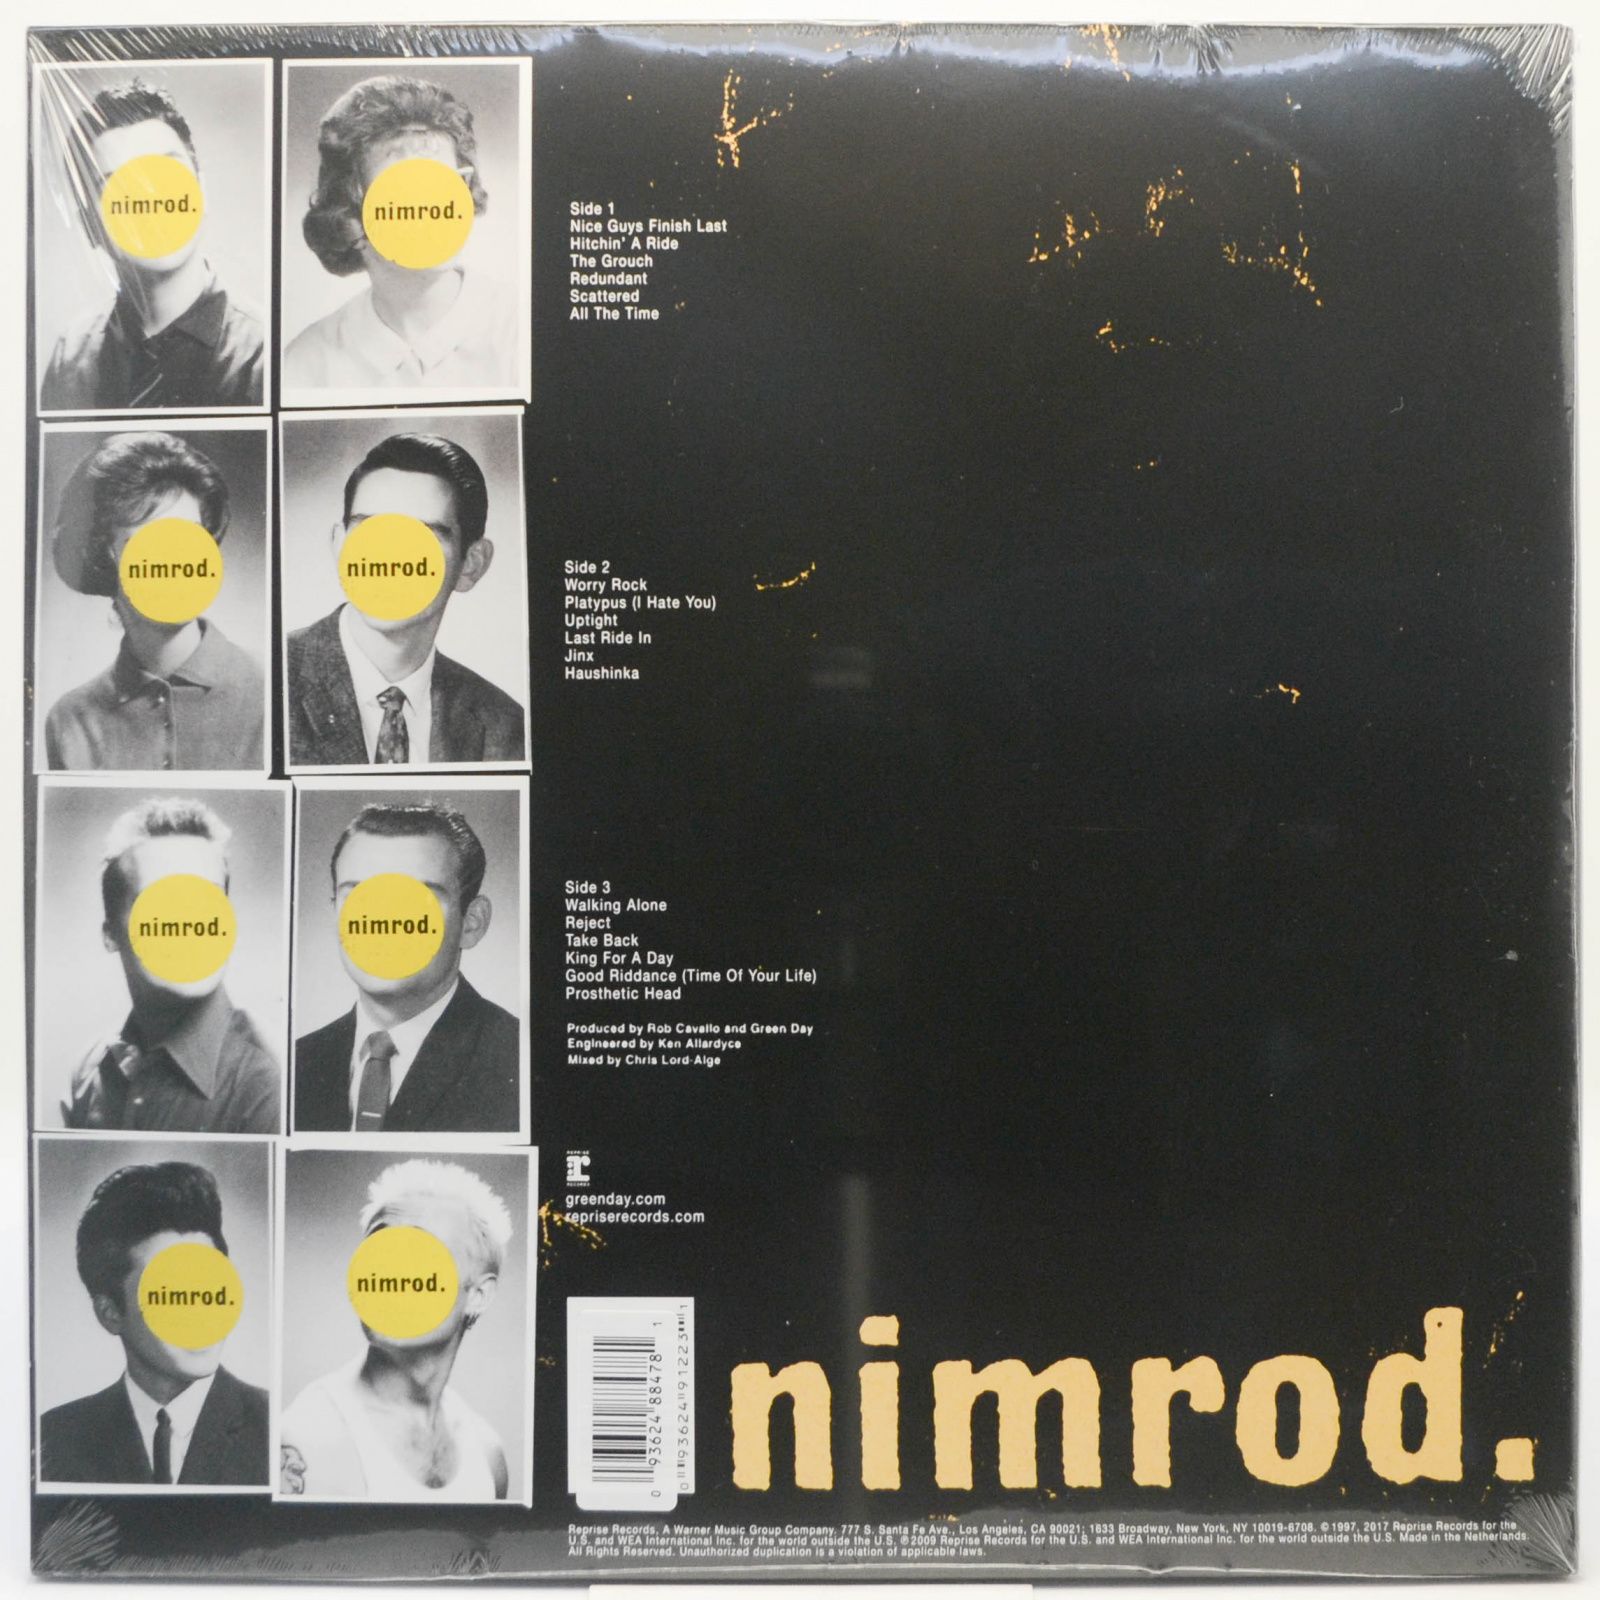 Green Day — Nimrod. (2LP), 1997